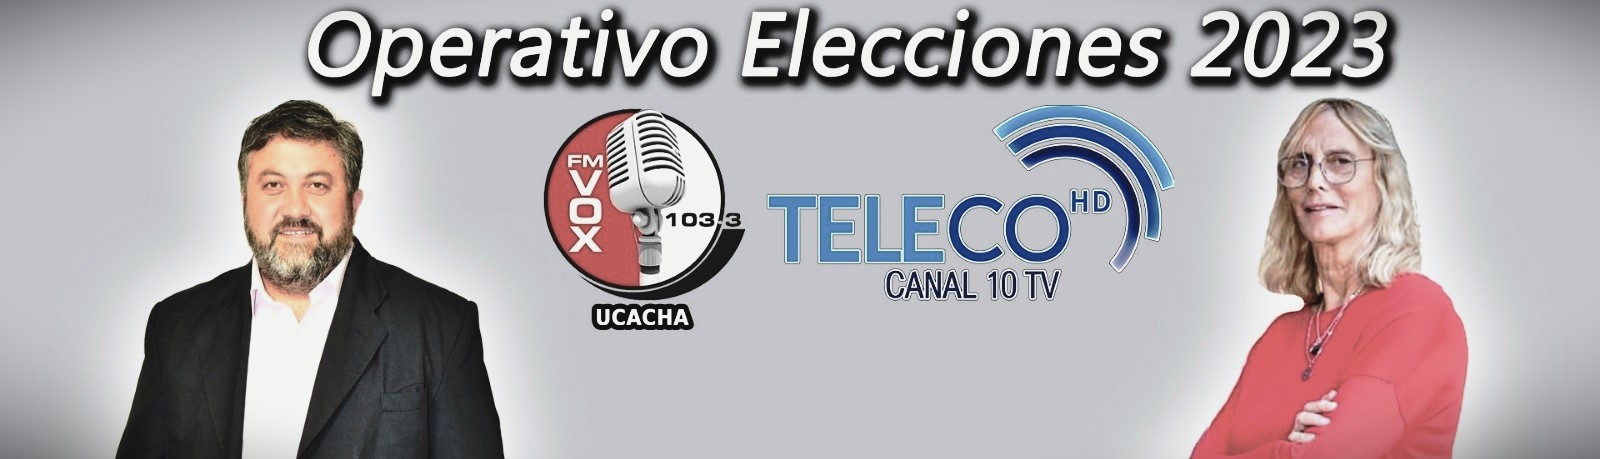 Elecciones Municipales Ucacha 4junio2023 bb